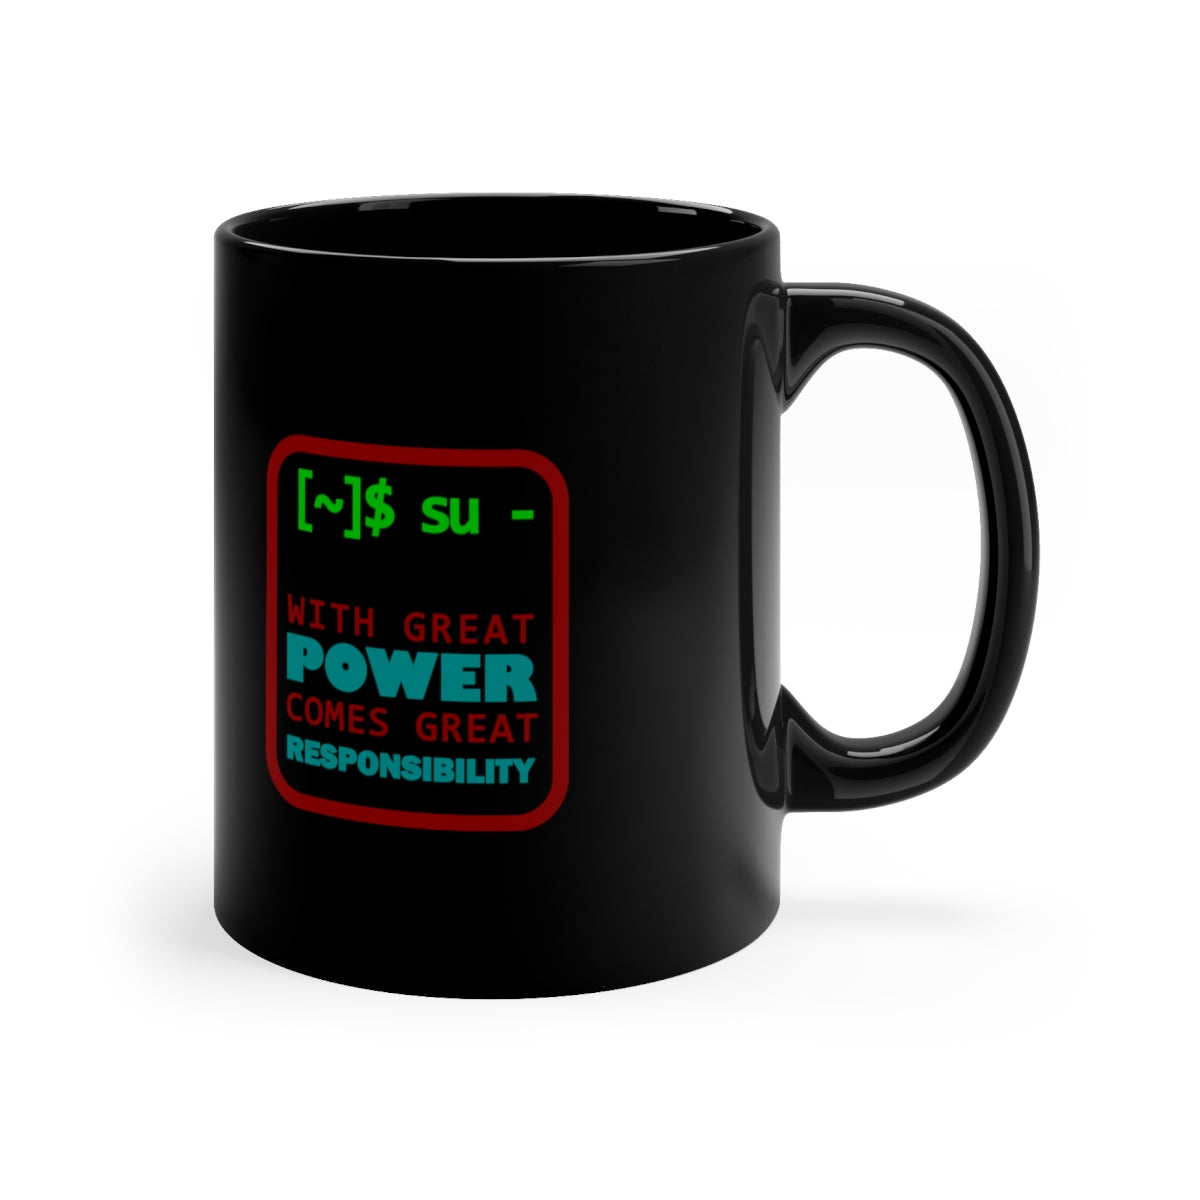 Great Power - Black Coffee Mug, 11oz